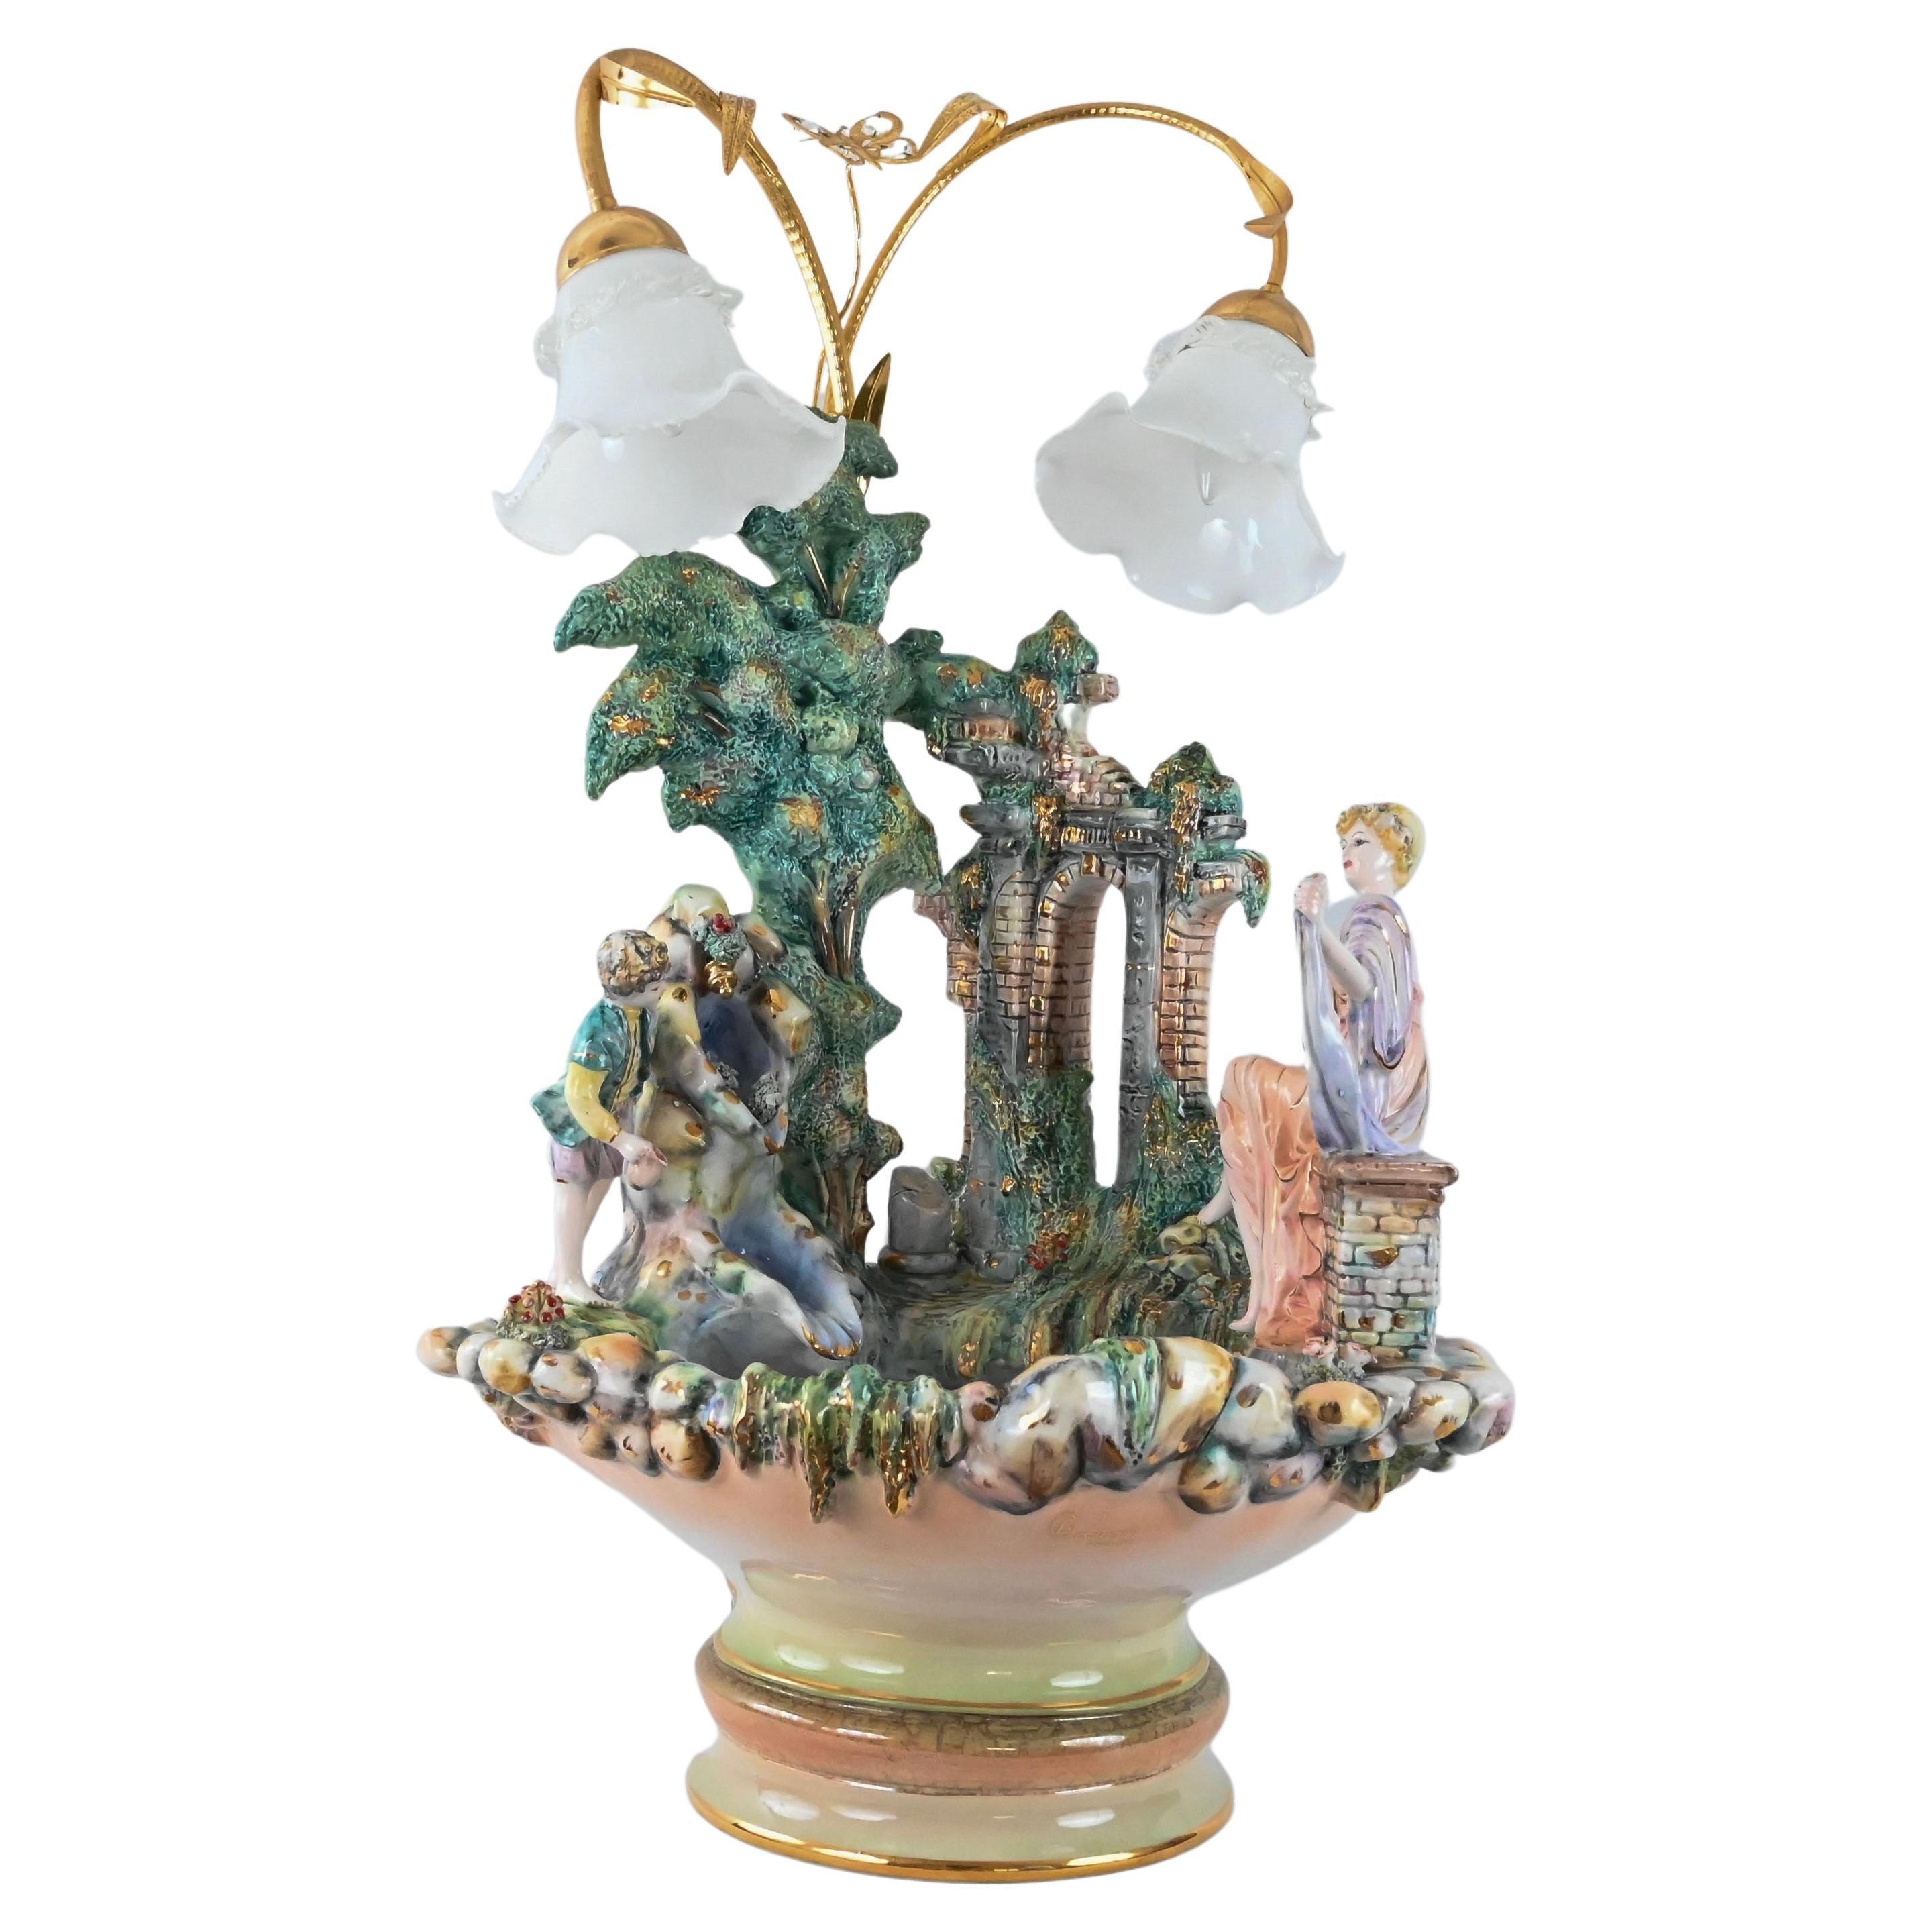 Gianni Lorenzon Italian Porcelain Illuminated Water Fountain Light or Bird Bath For Sale